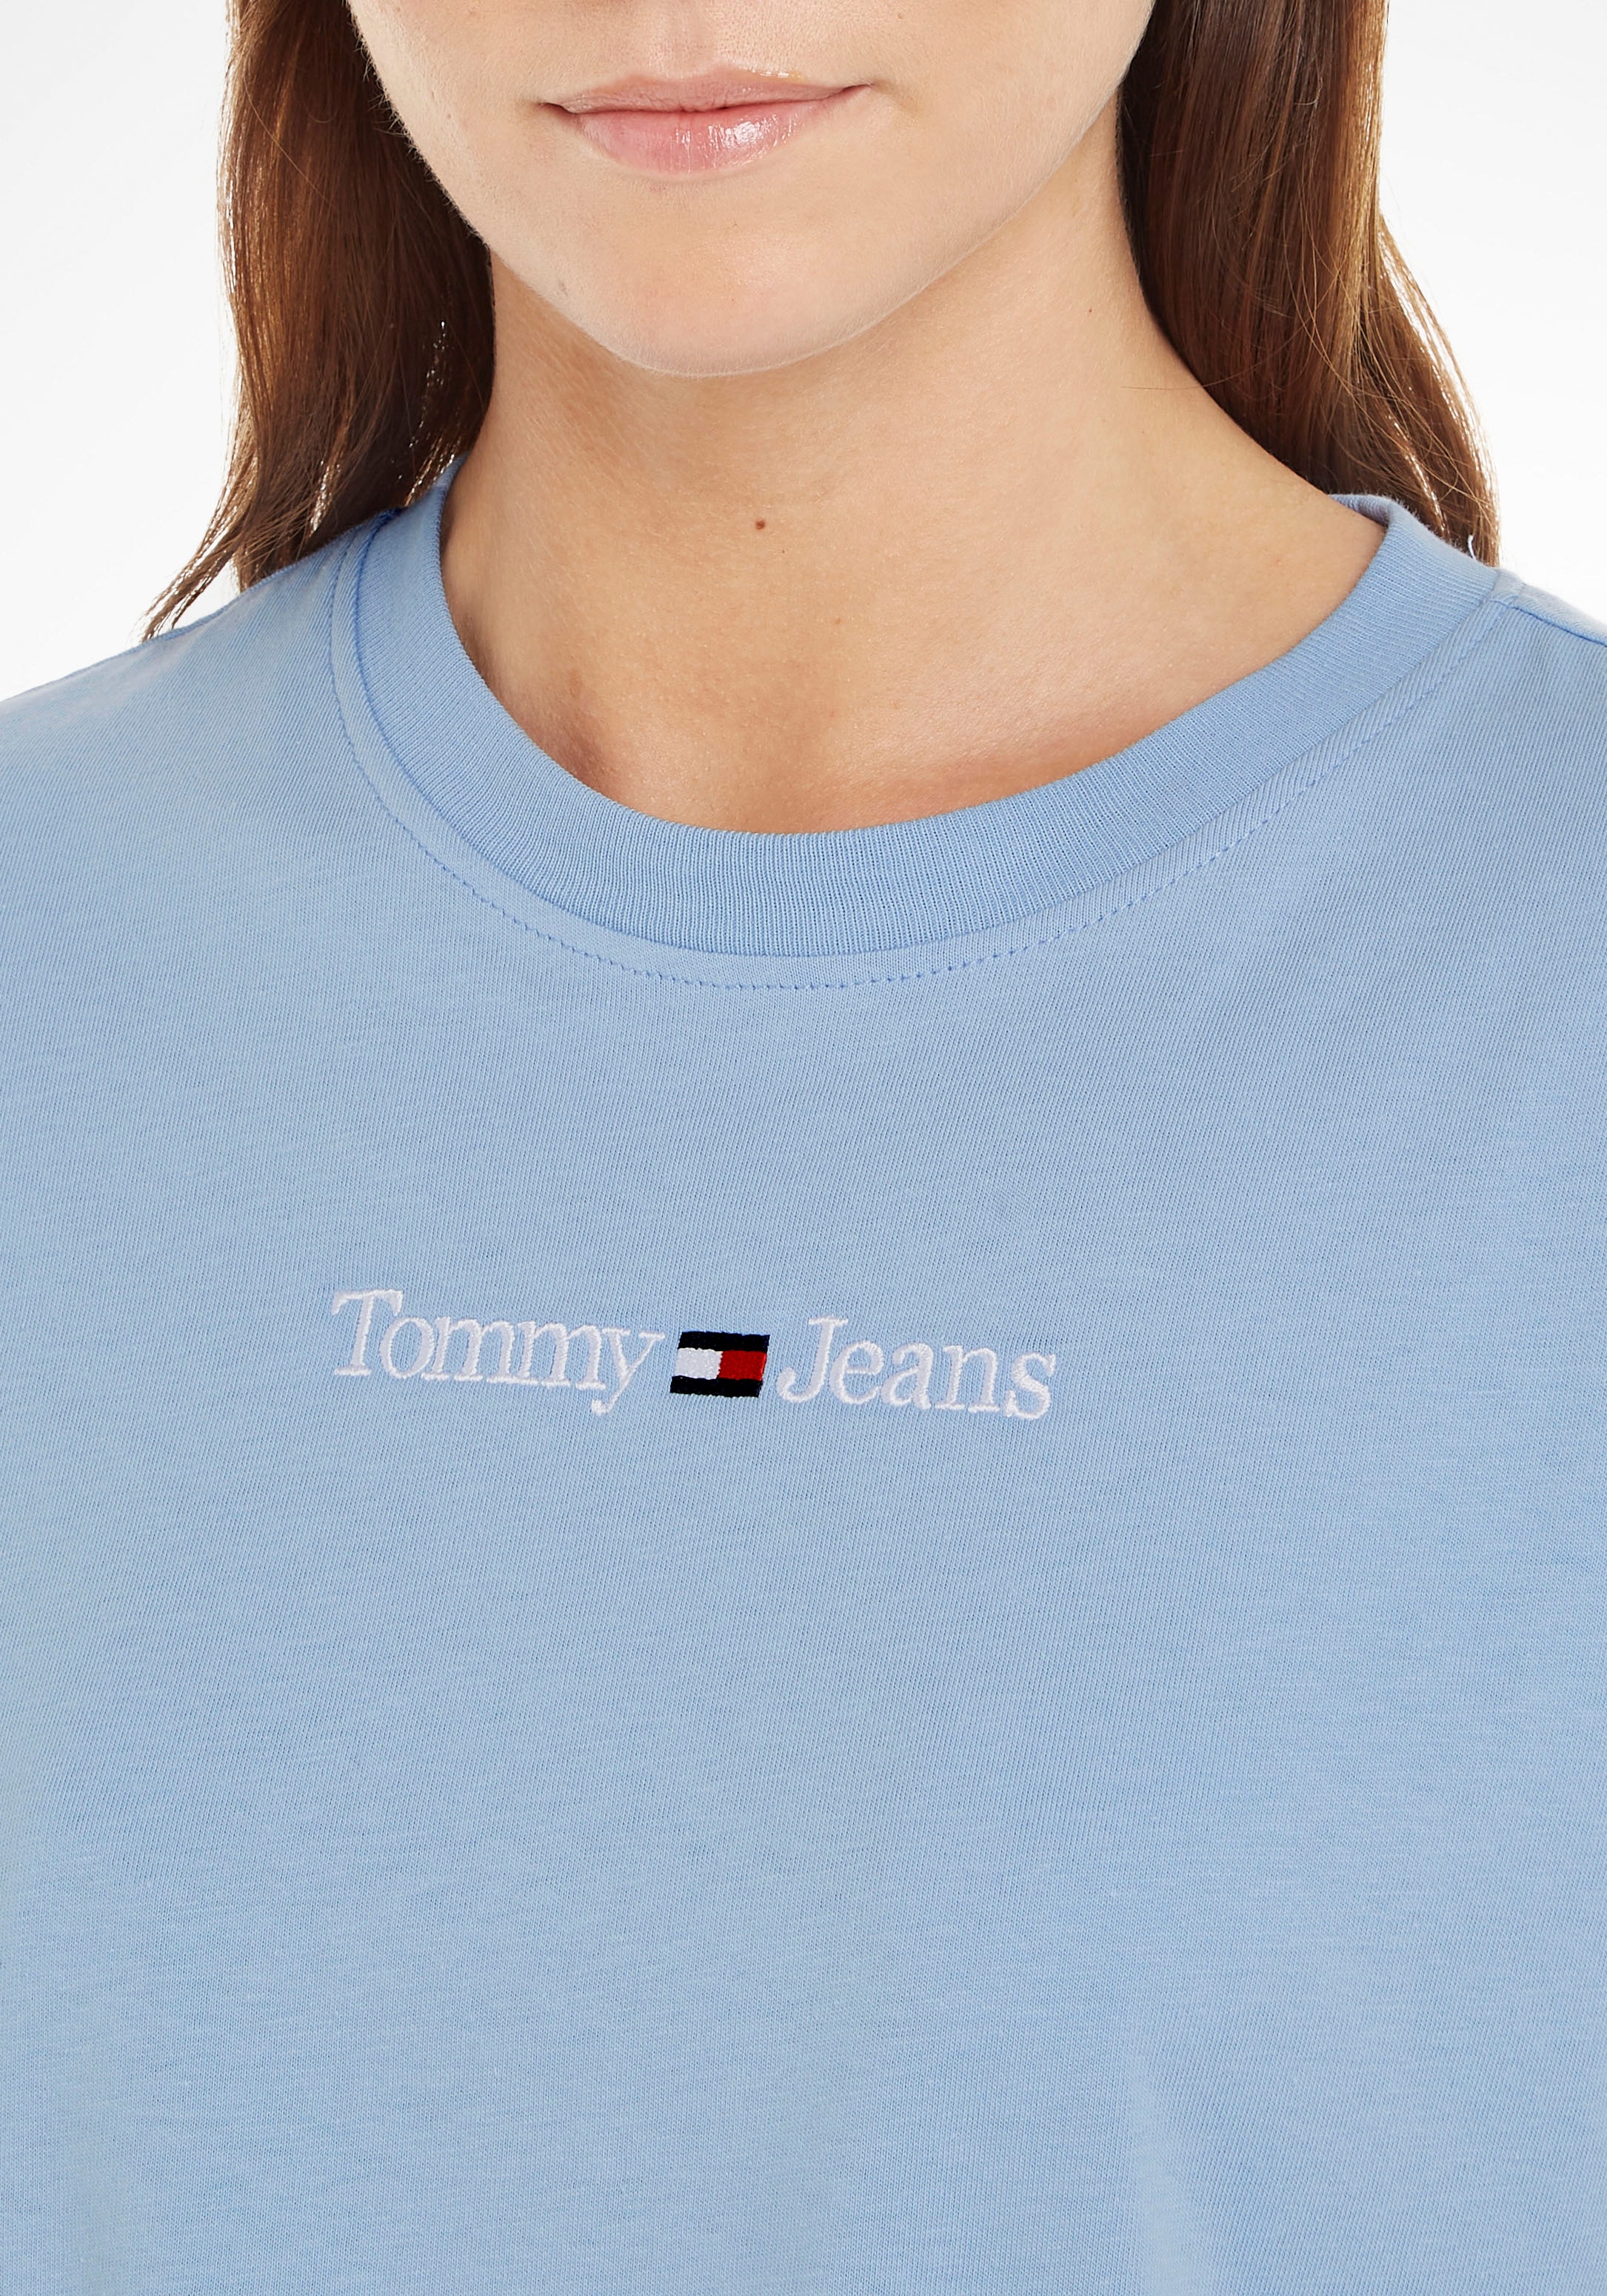 Tommy Jeans Kurzarmshirt »TJW CLS LINEAR Logoschriftzug Linear mit Jeans Tommy shoppen SERIF TEE«